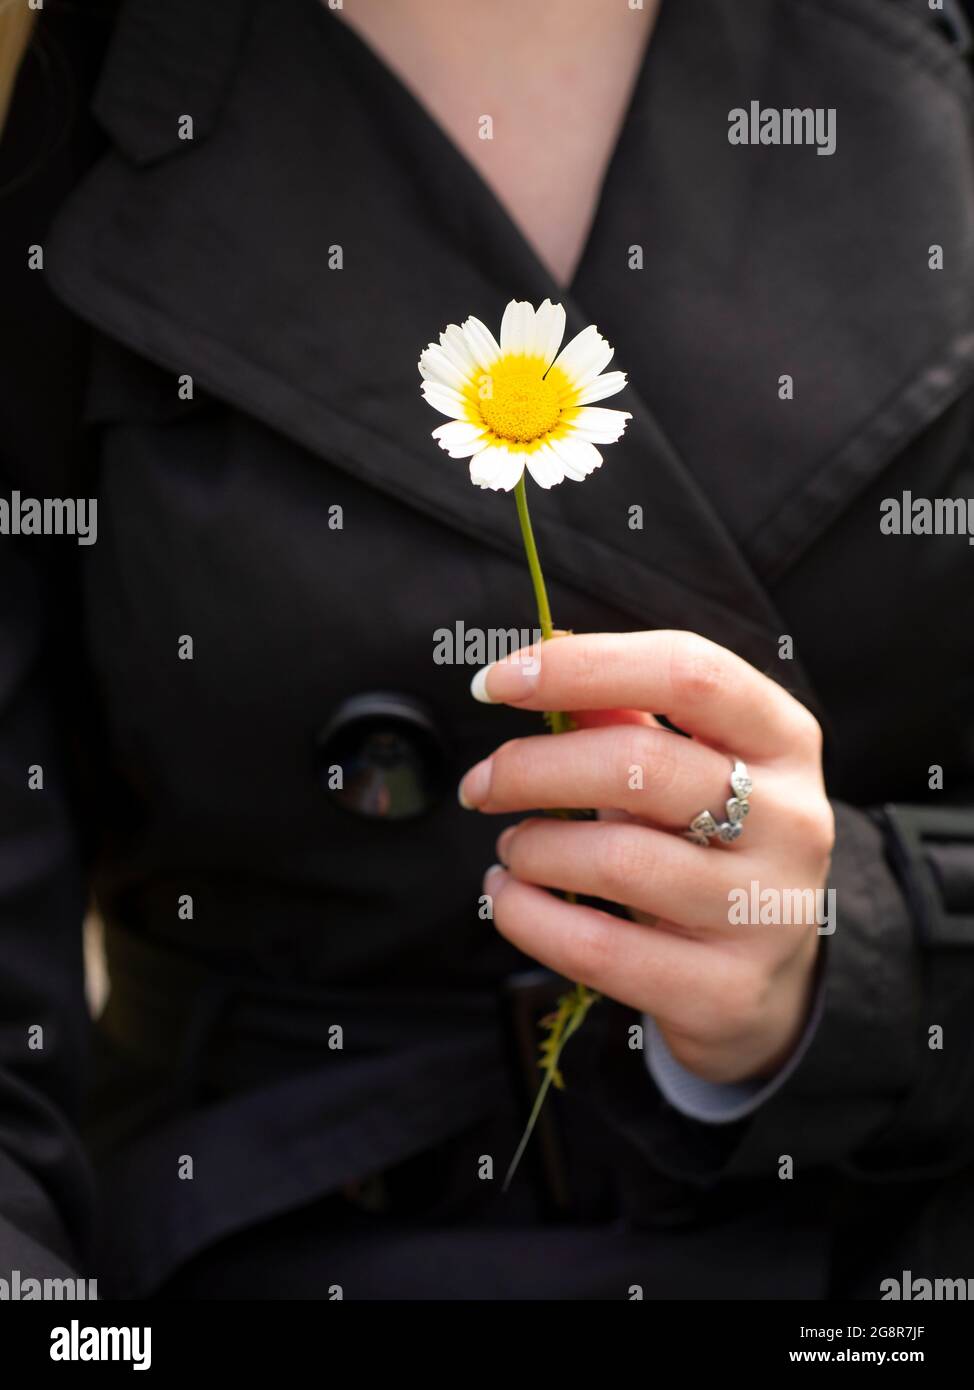 Woman holding a daisy Stock Photo